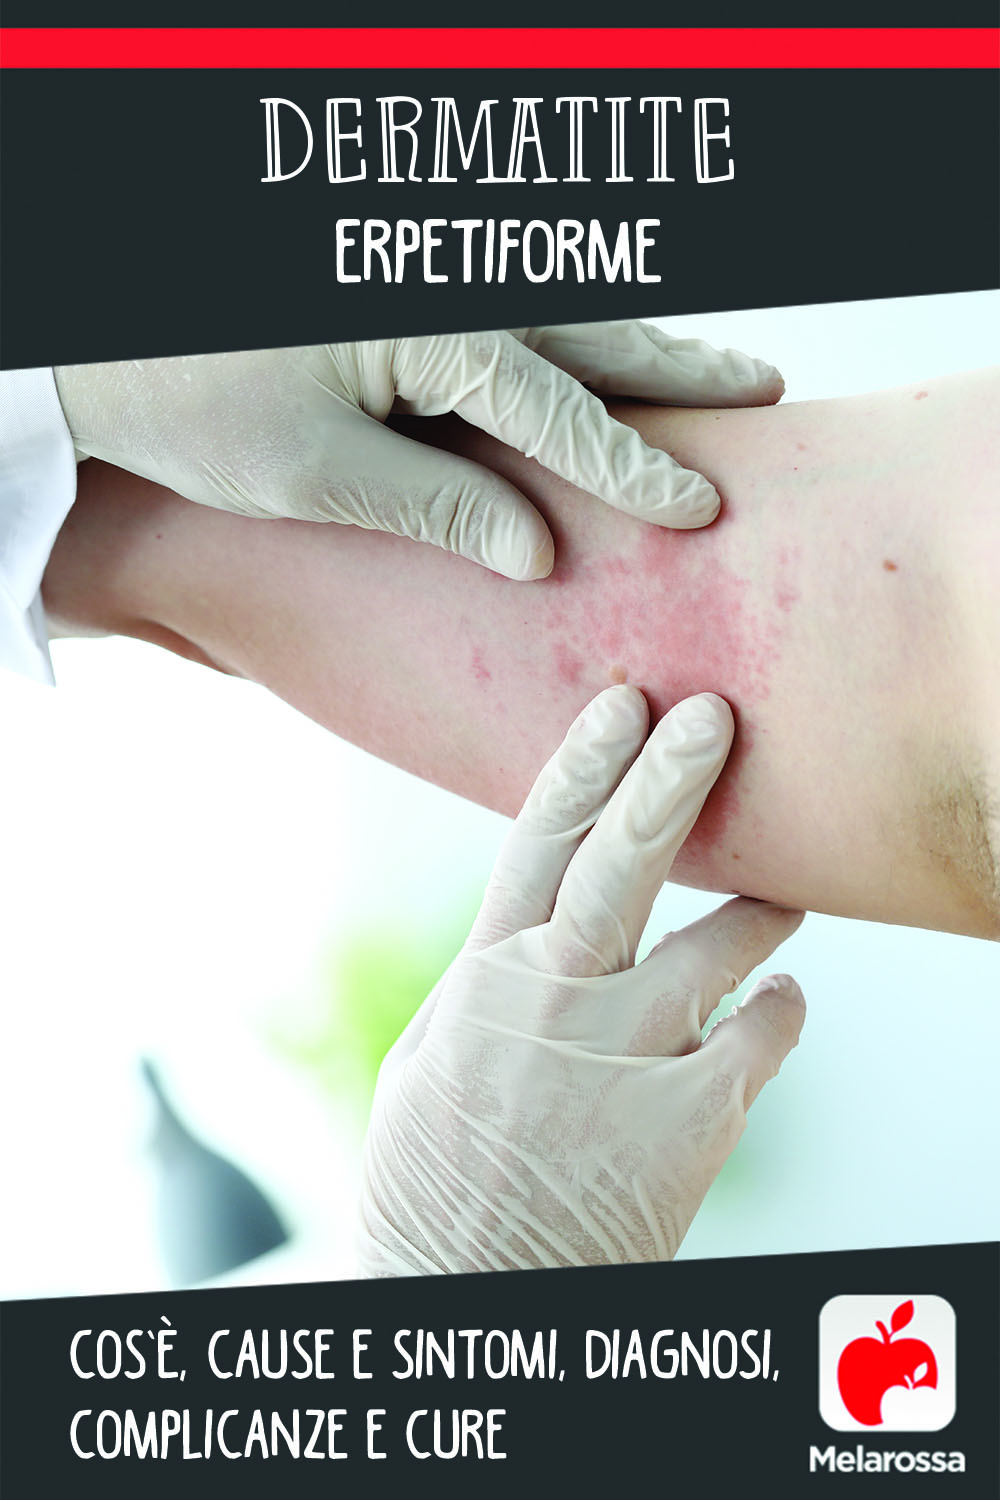 dermatite erpetiforme: cos'è cause, sintomi e cure